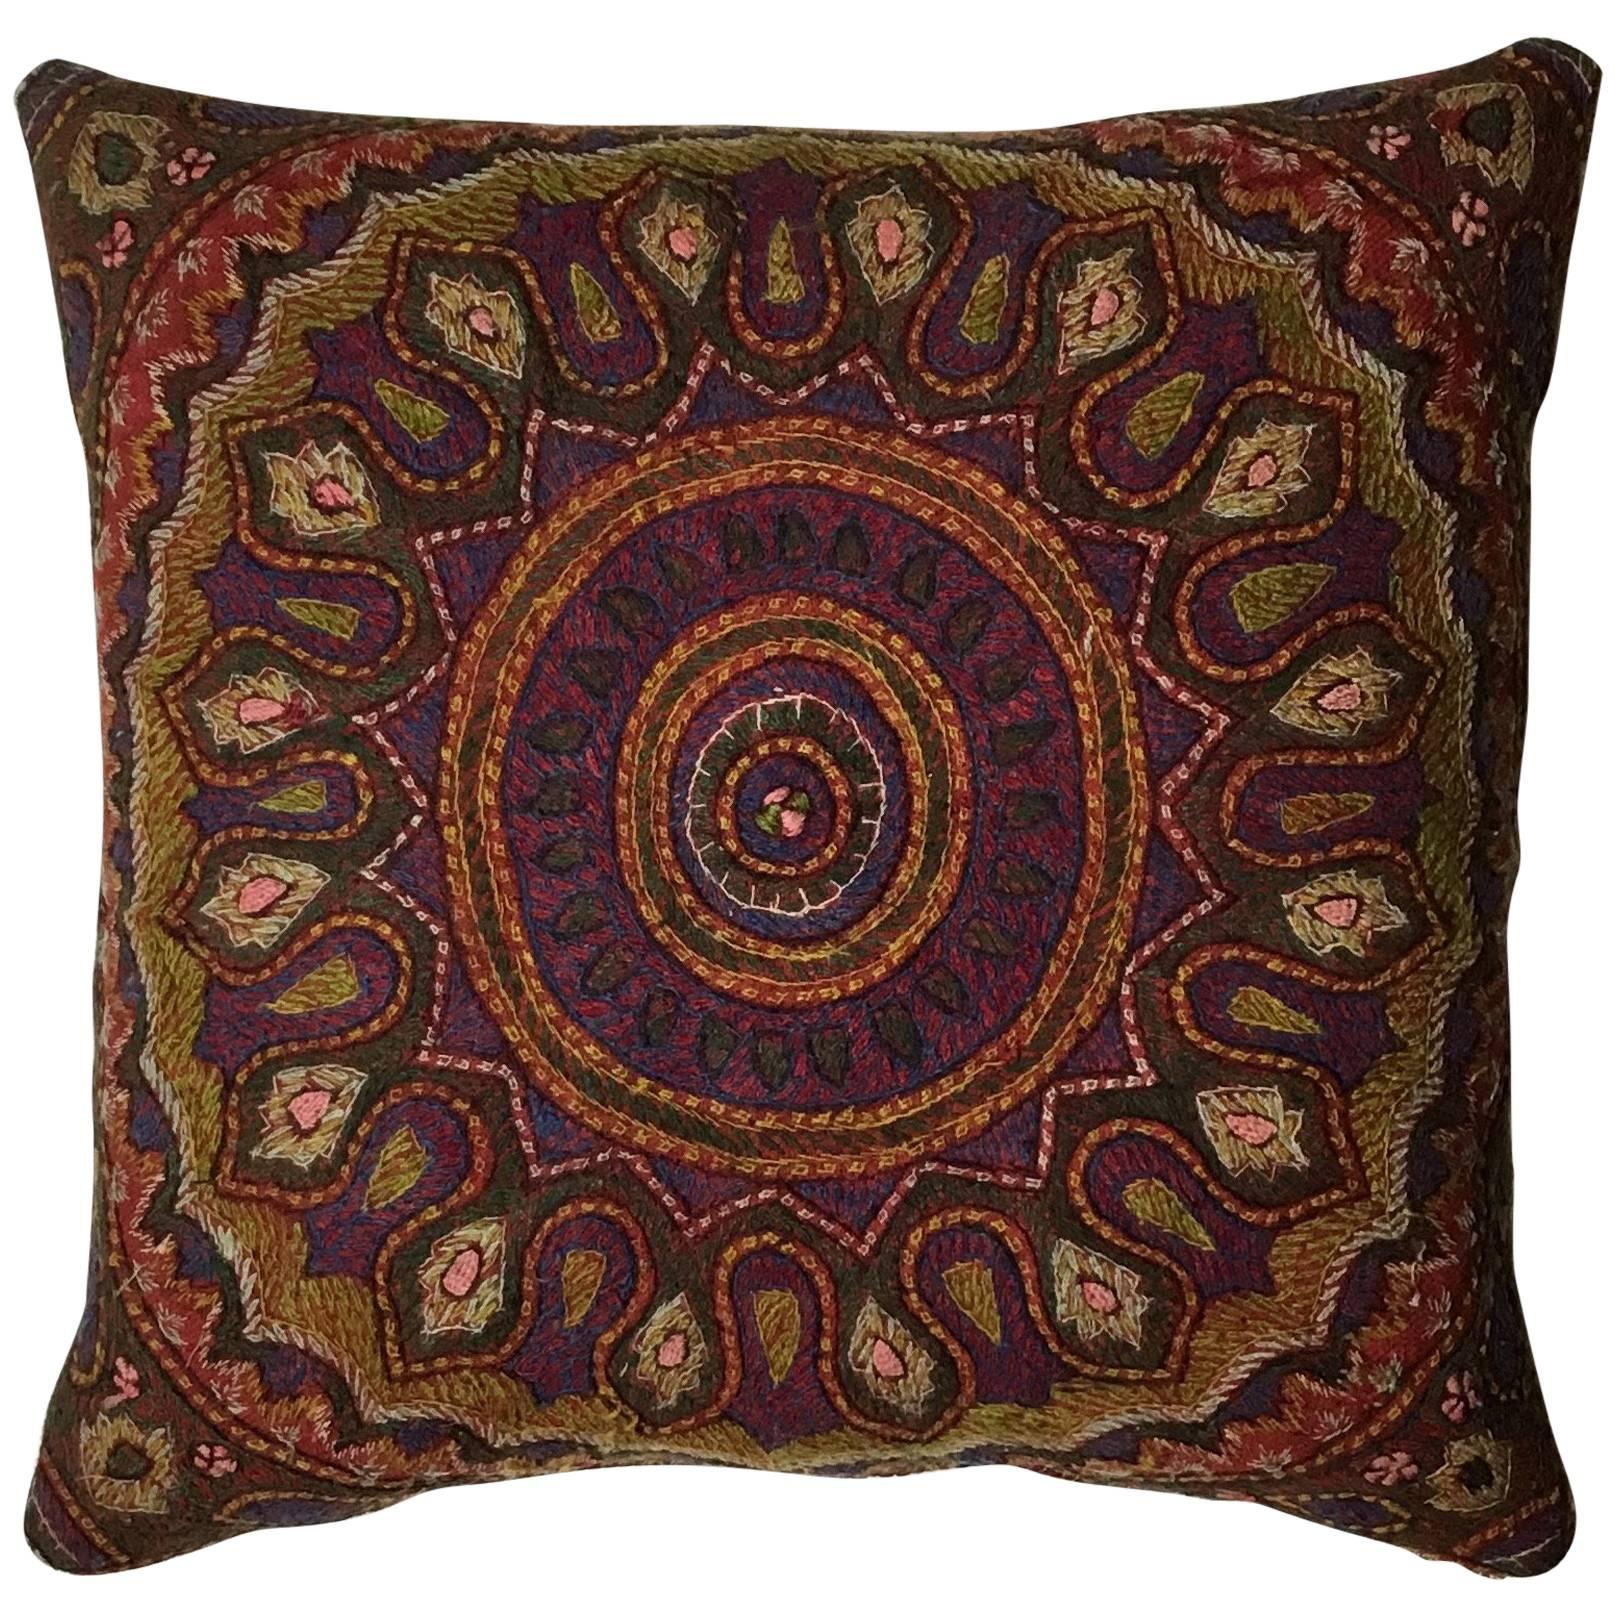 Hand Embroidery Persian Suzani Pillow